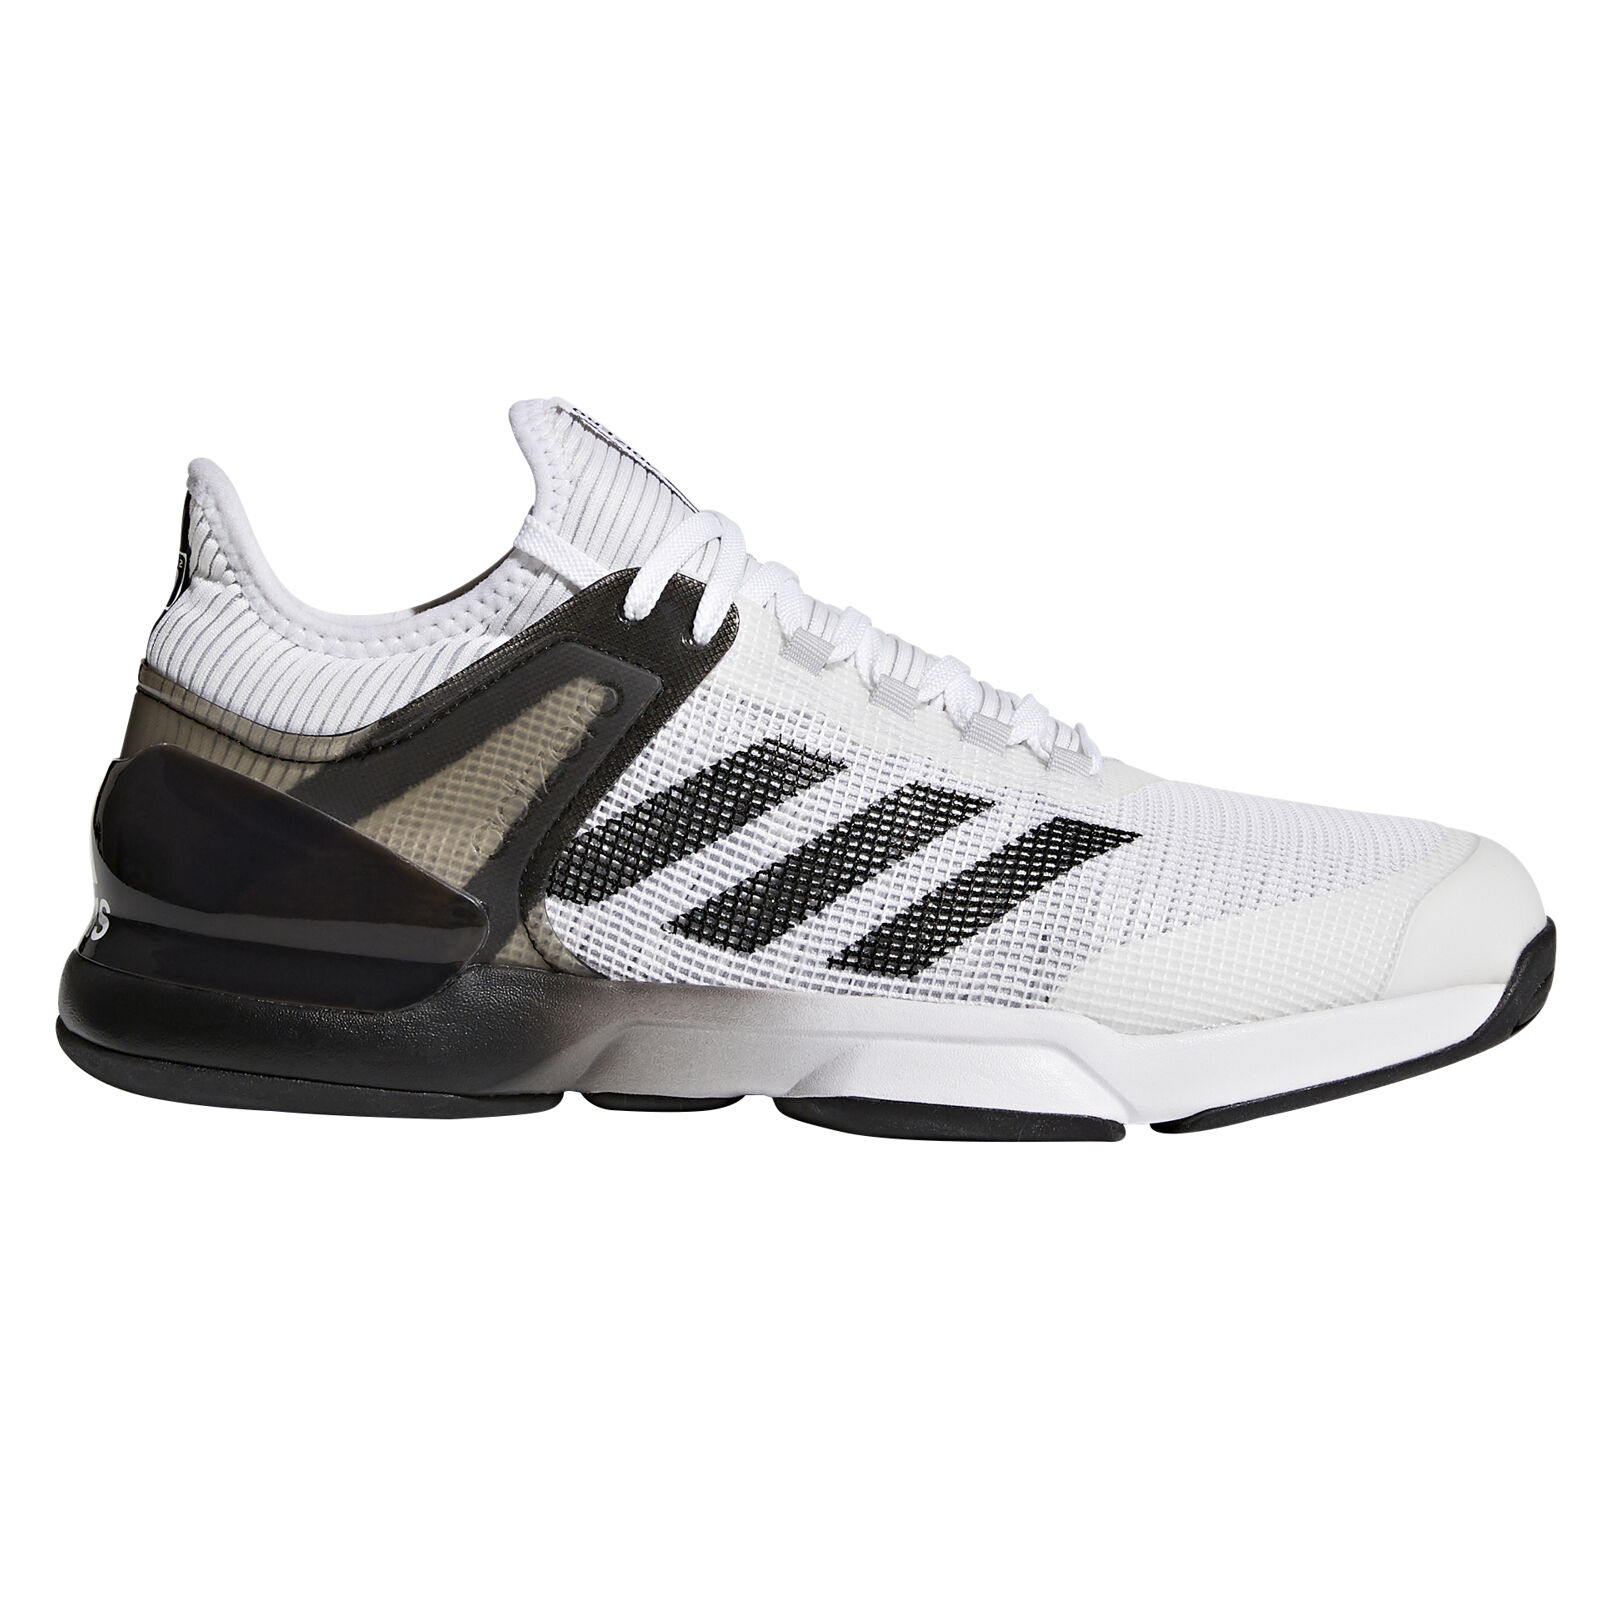 adidas adizero Ubersonic 2.0 Men's Tennis Shoes - White/Black